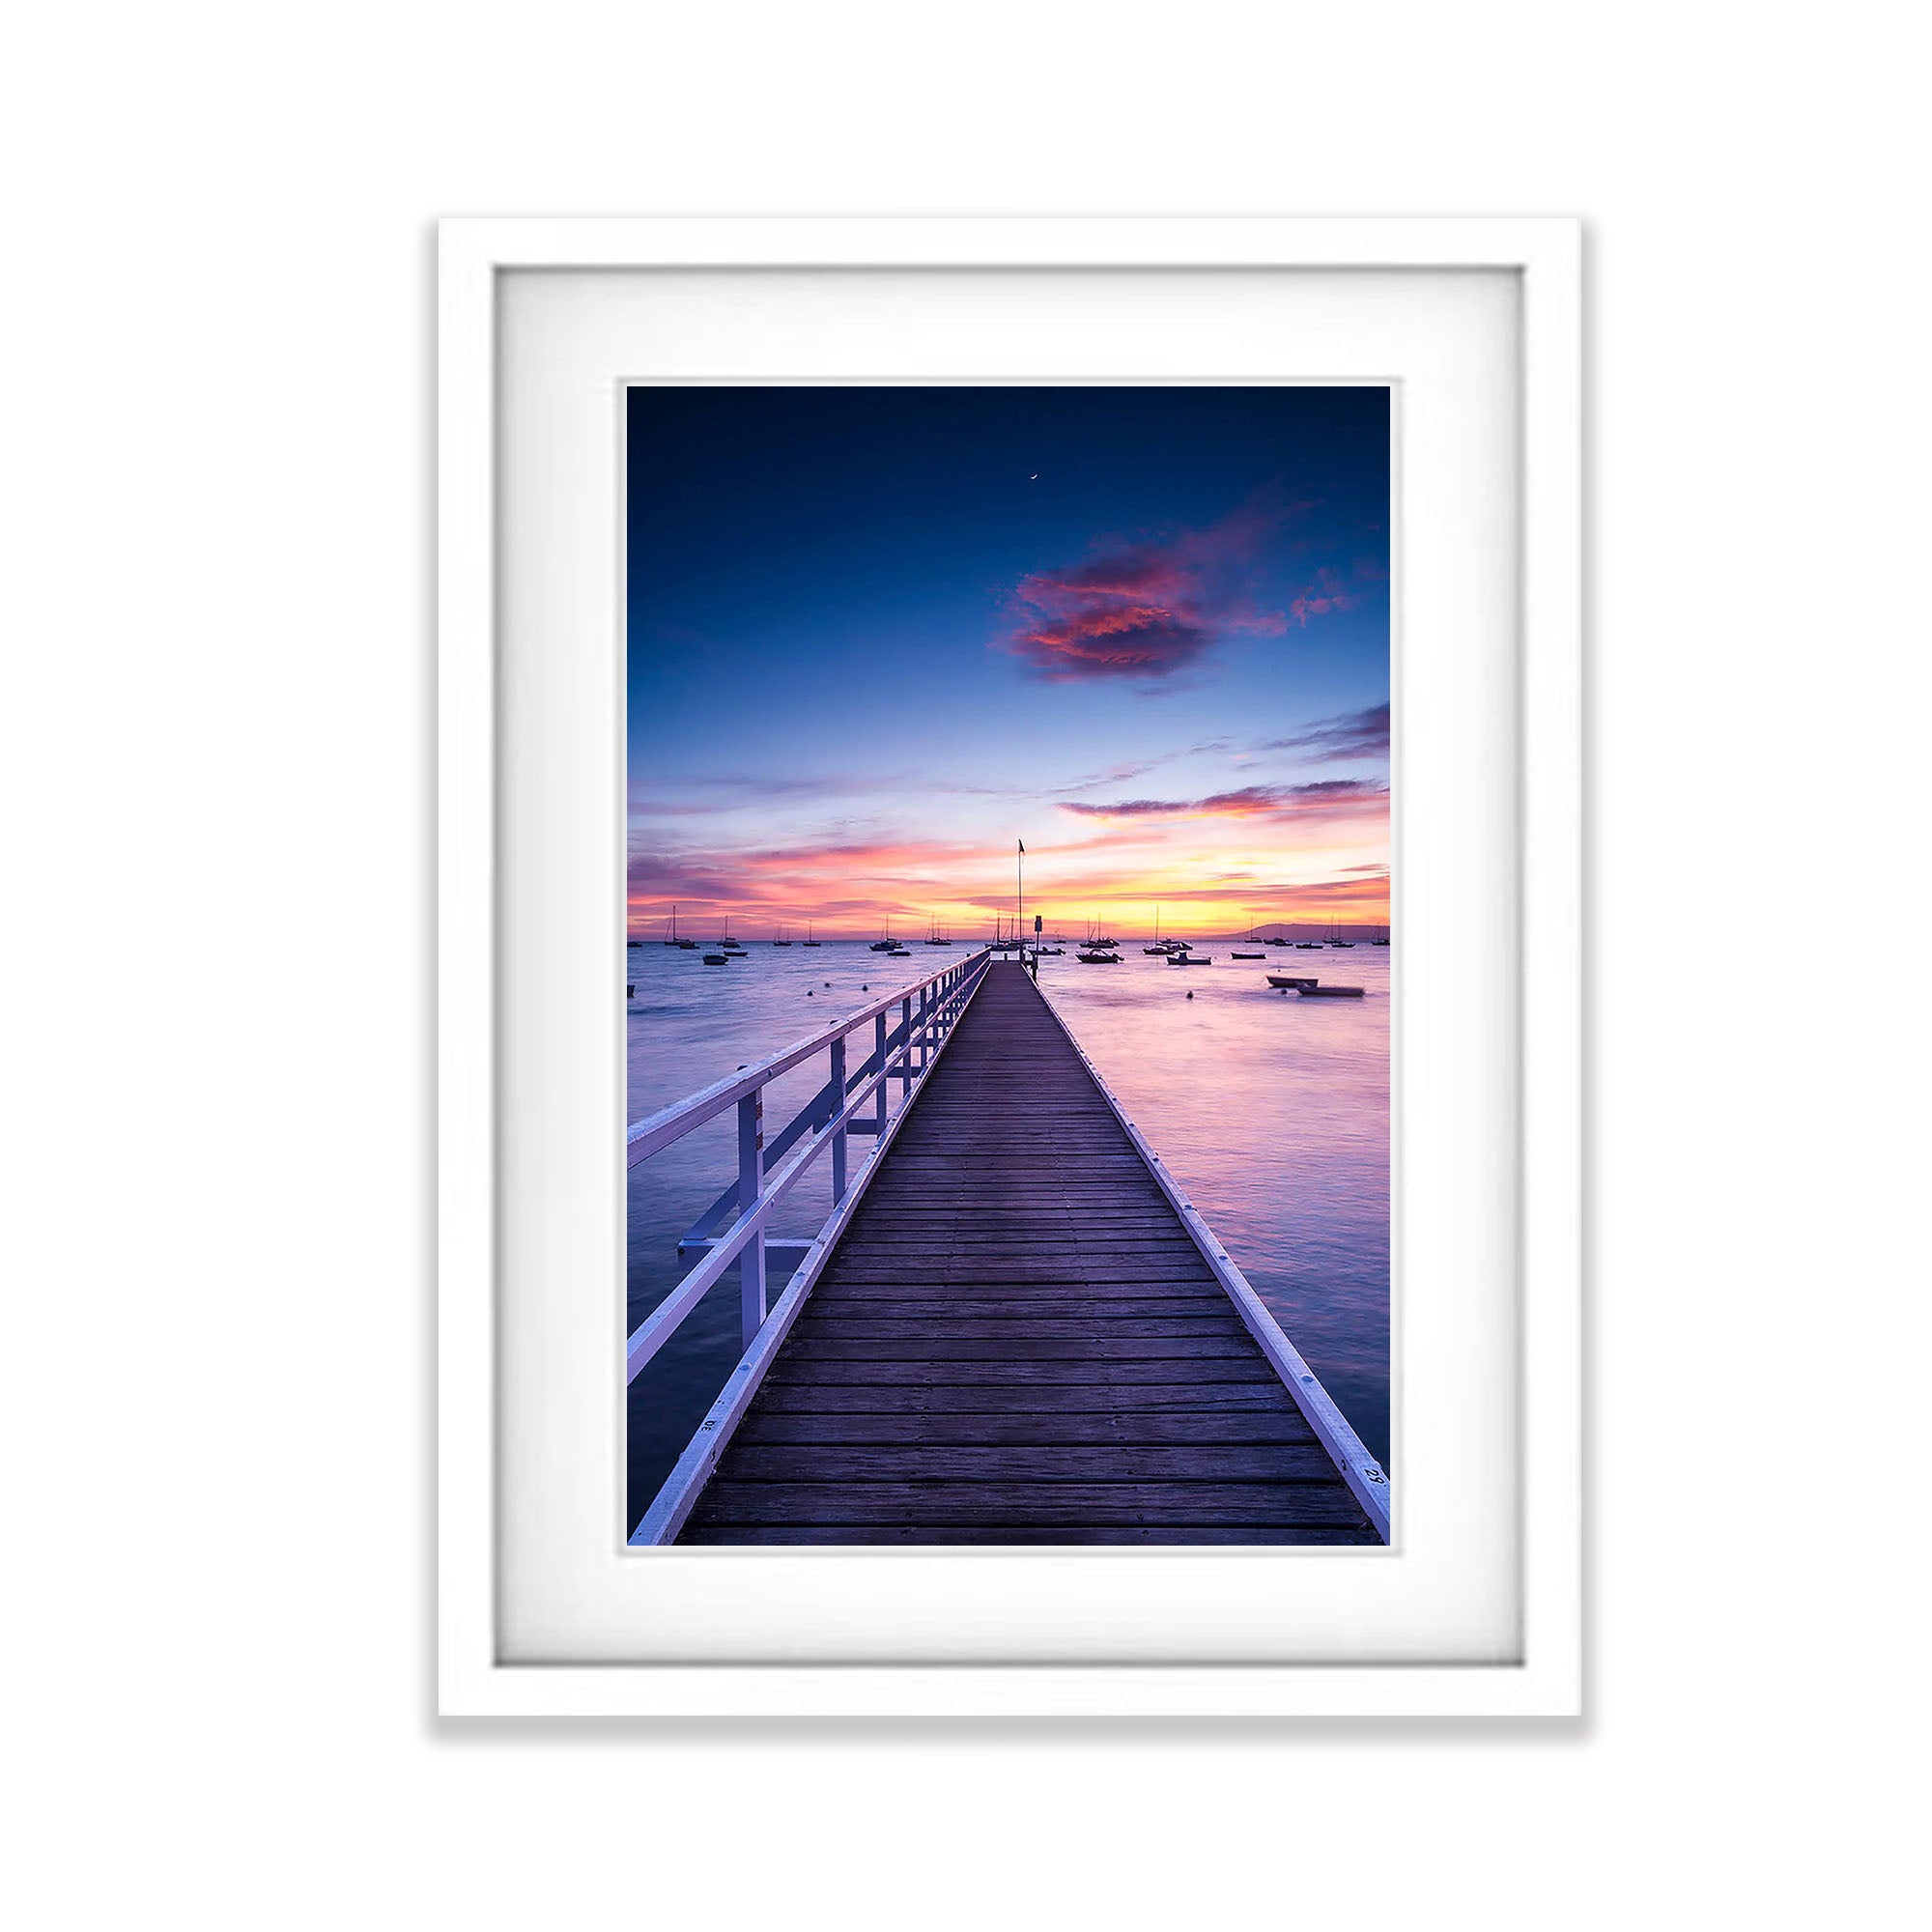 Cameron Bight Jetty sunrise, Sorrento, Mornington Peninsula